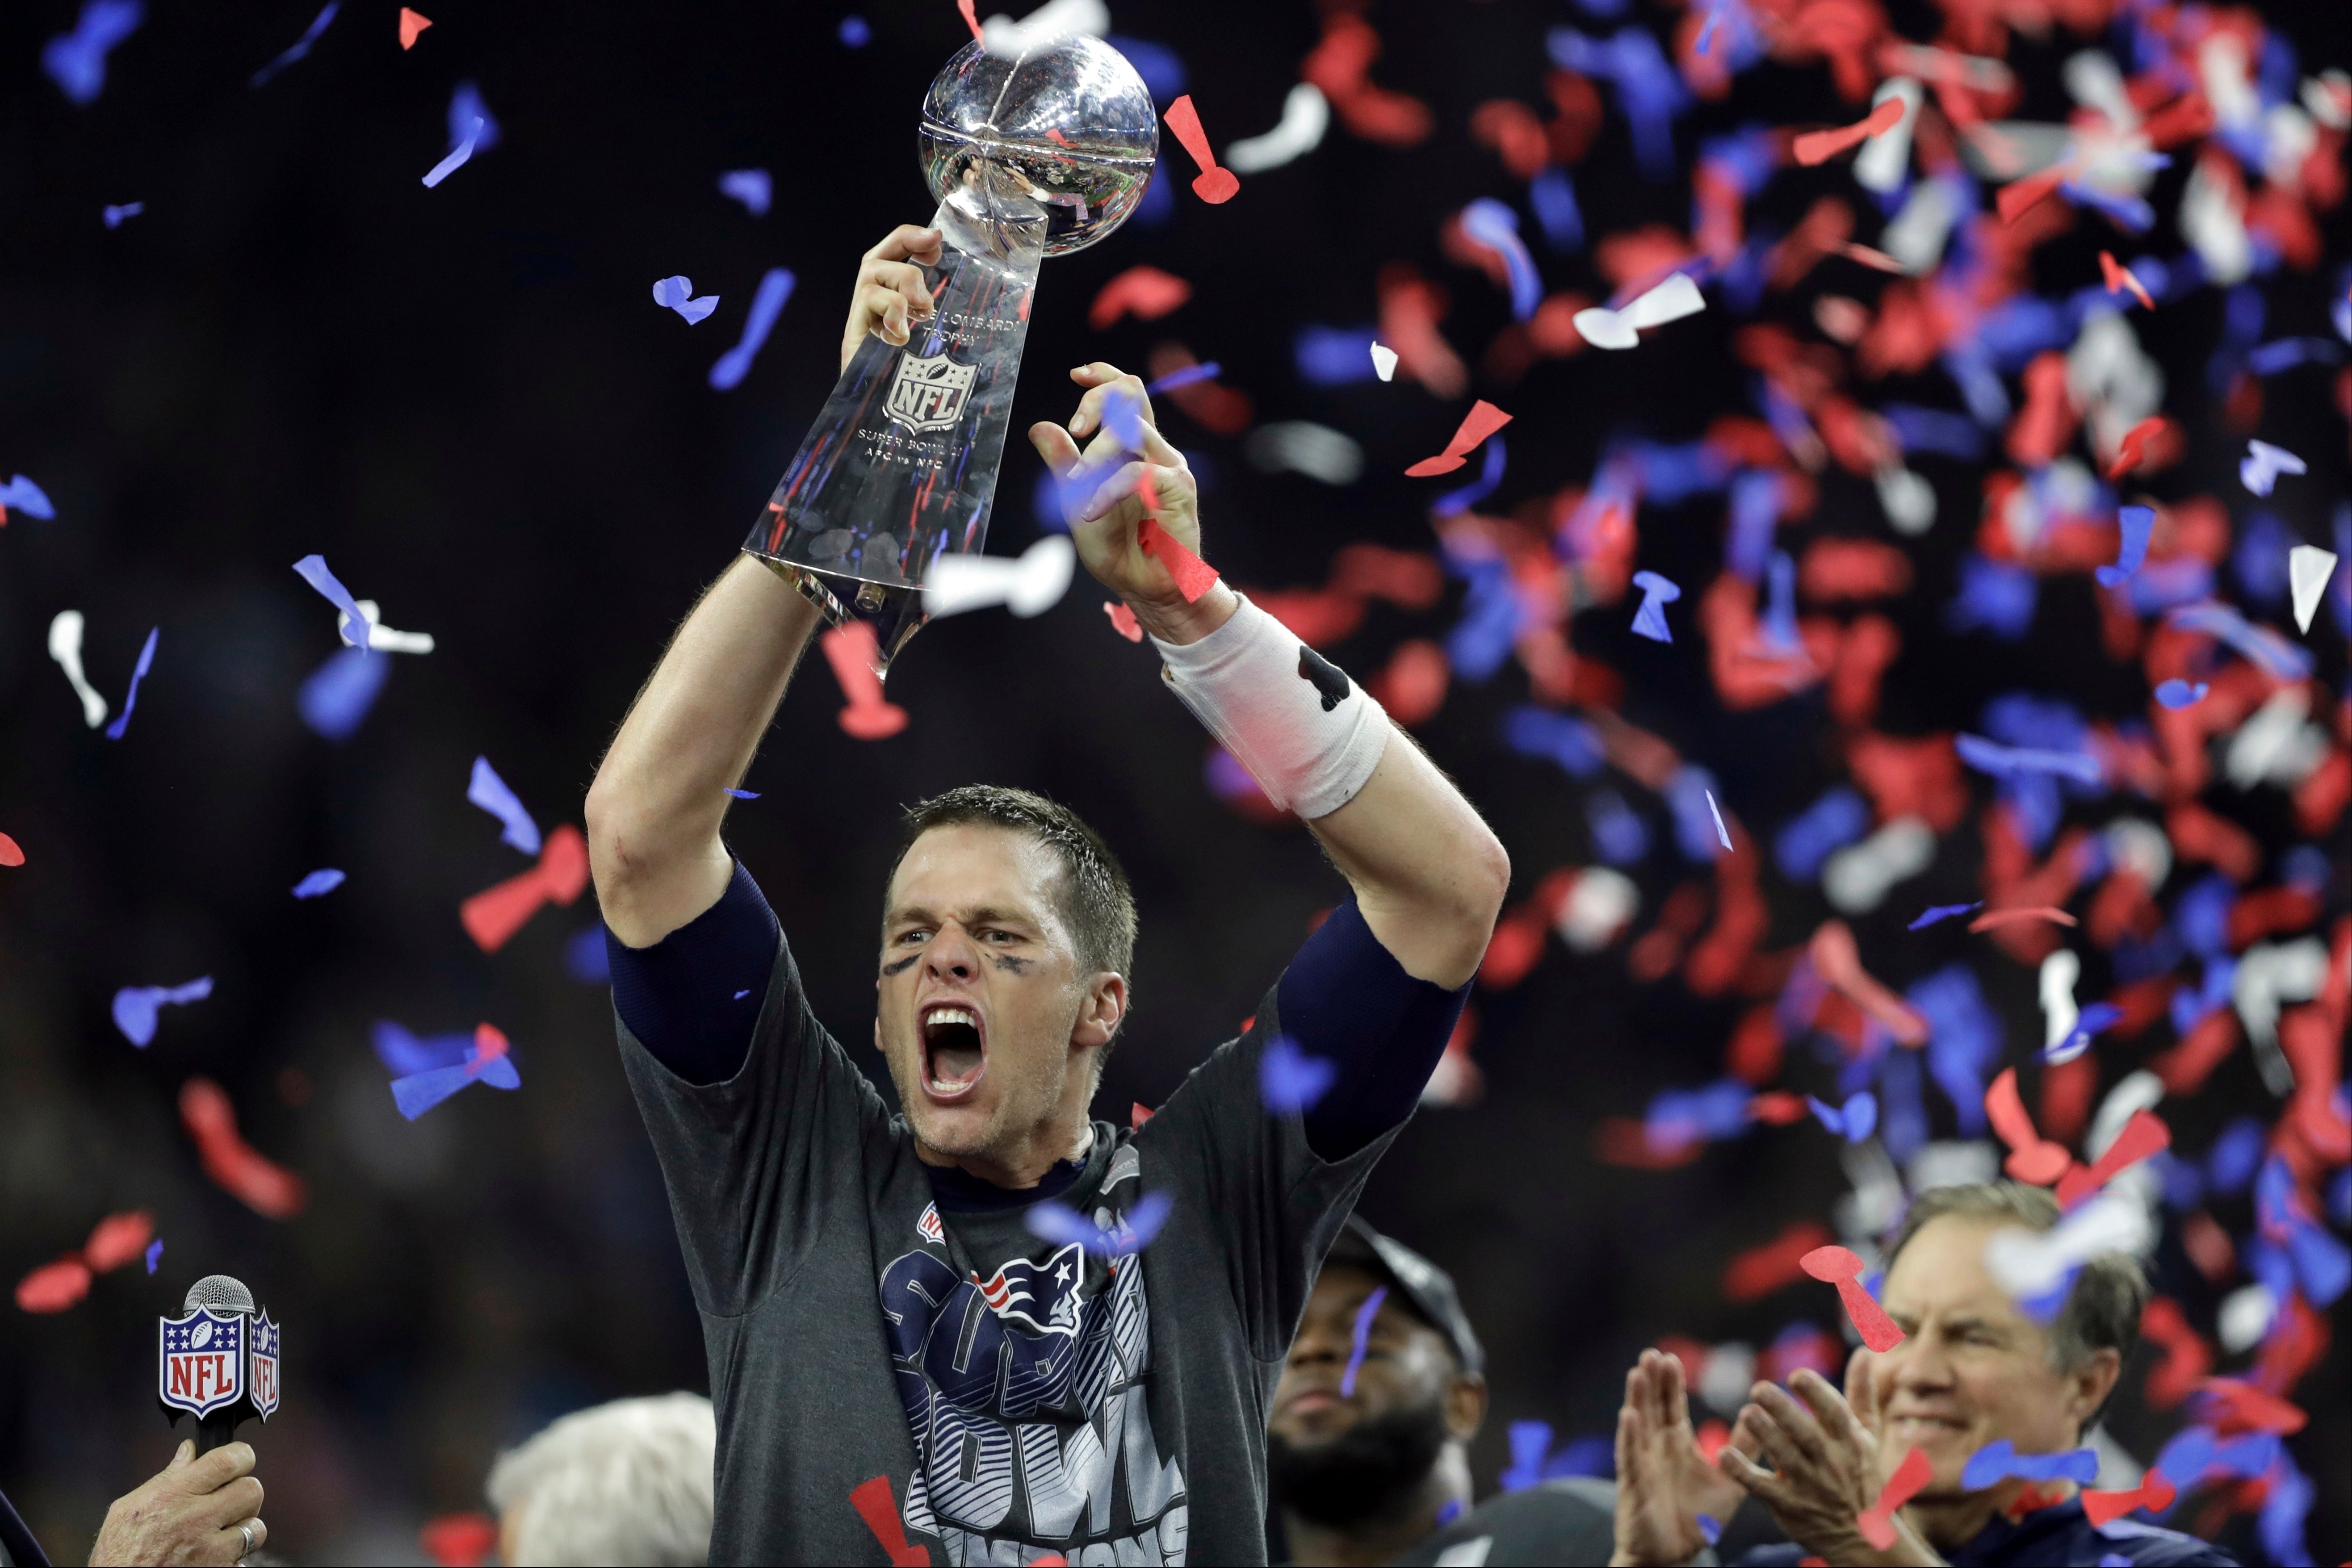 Wolff also compared Hamilton to seven-time Super Bowl winner Tom Brady